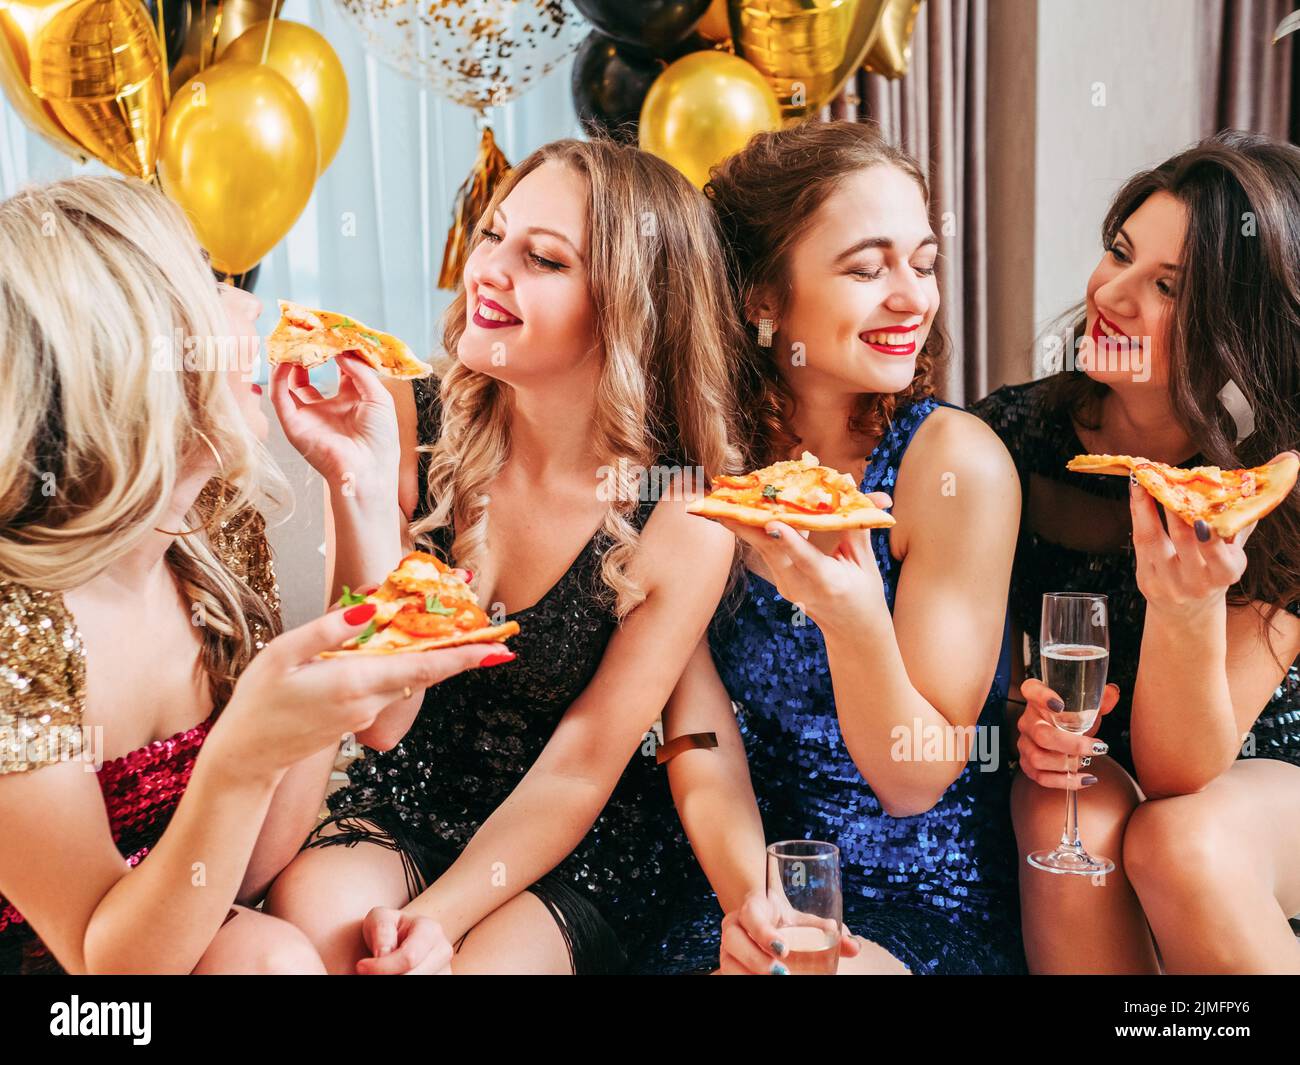 niñas fiesta pizza charlando diversión amigos cercanos Foto de stock